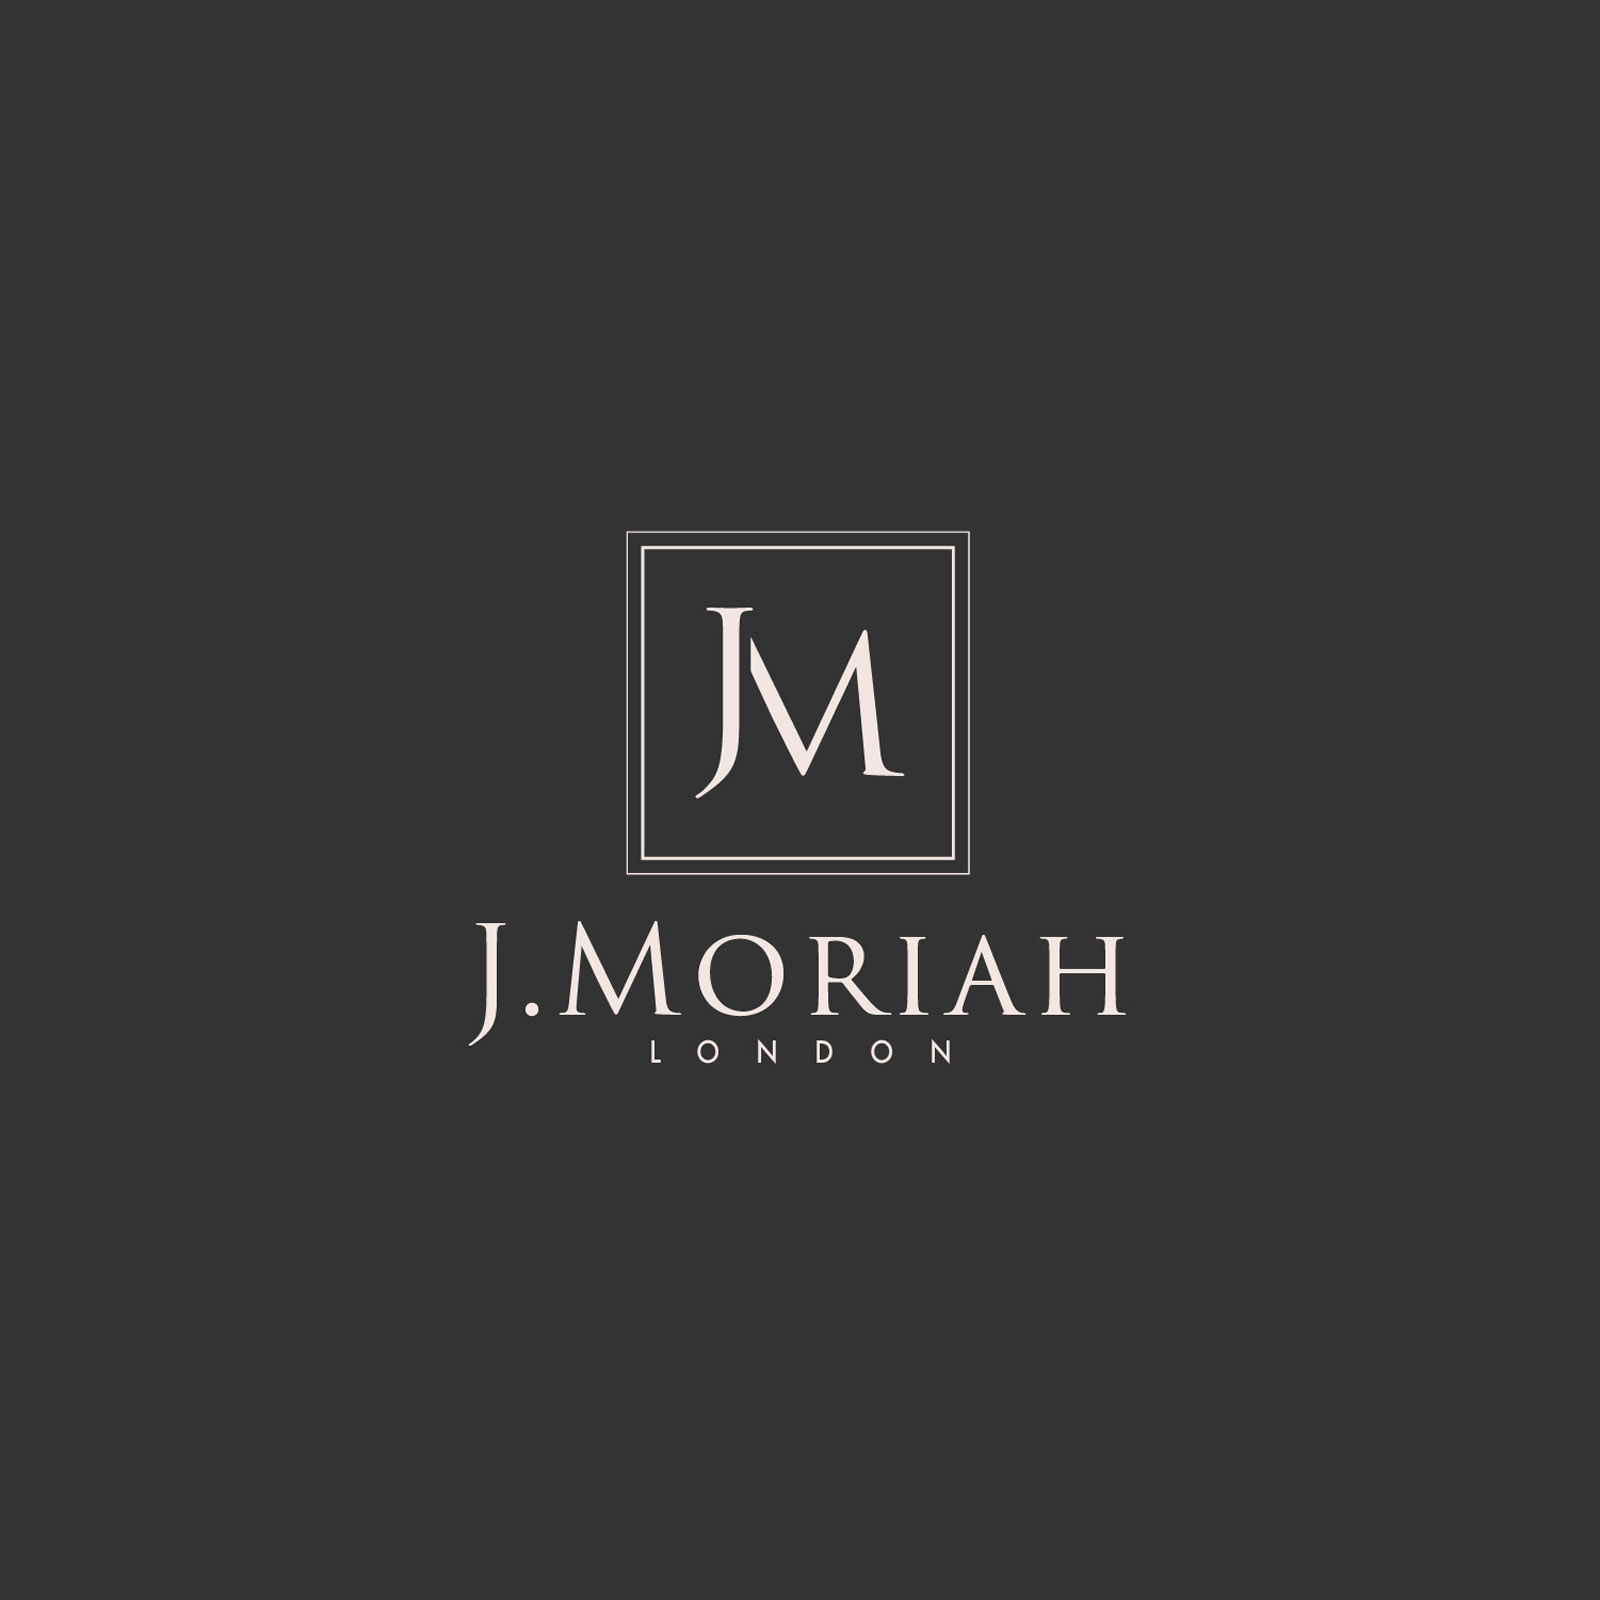 J Moriah Luxury Fashion Logo Design Project